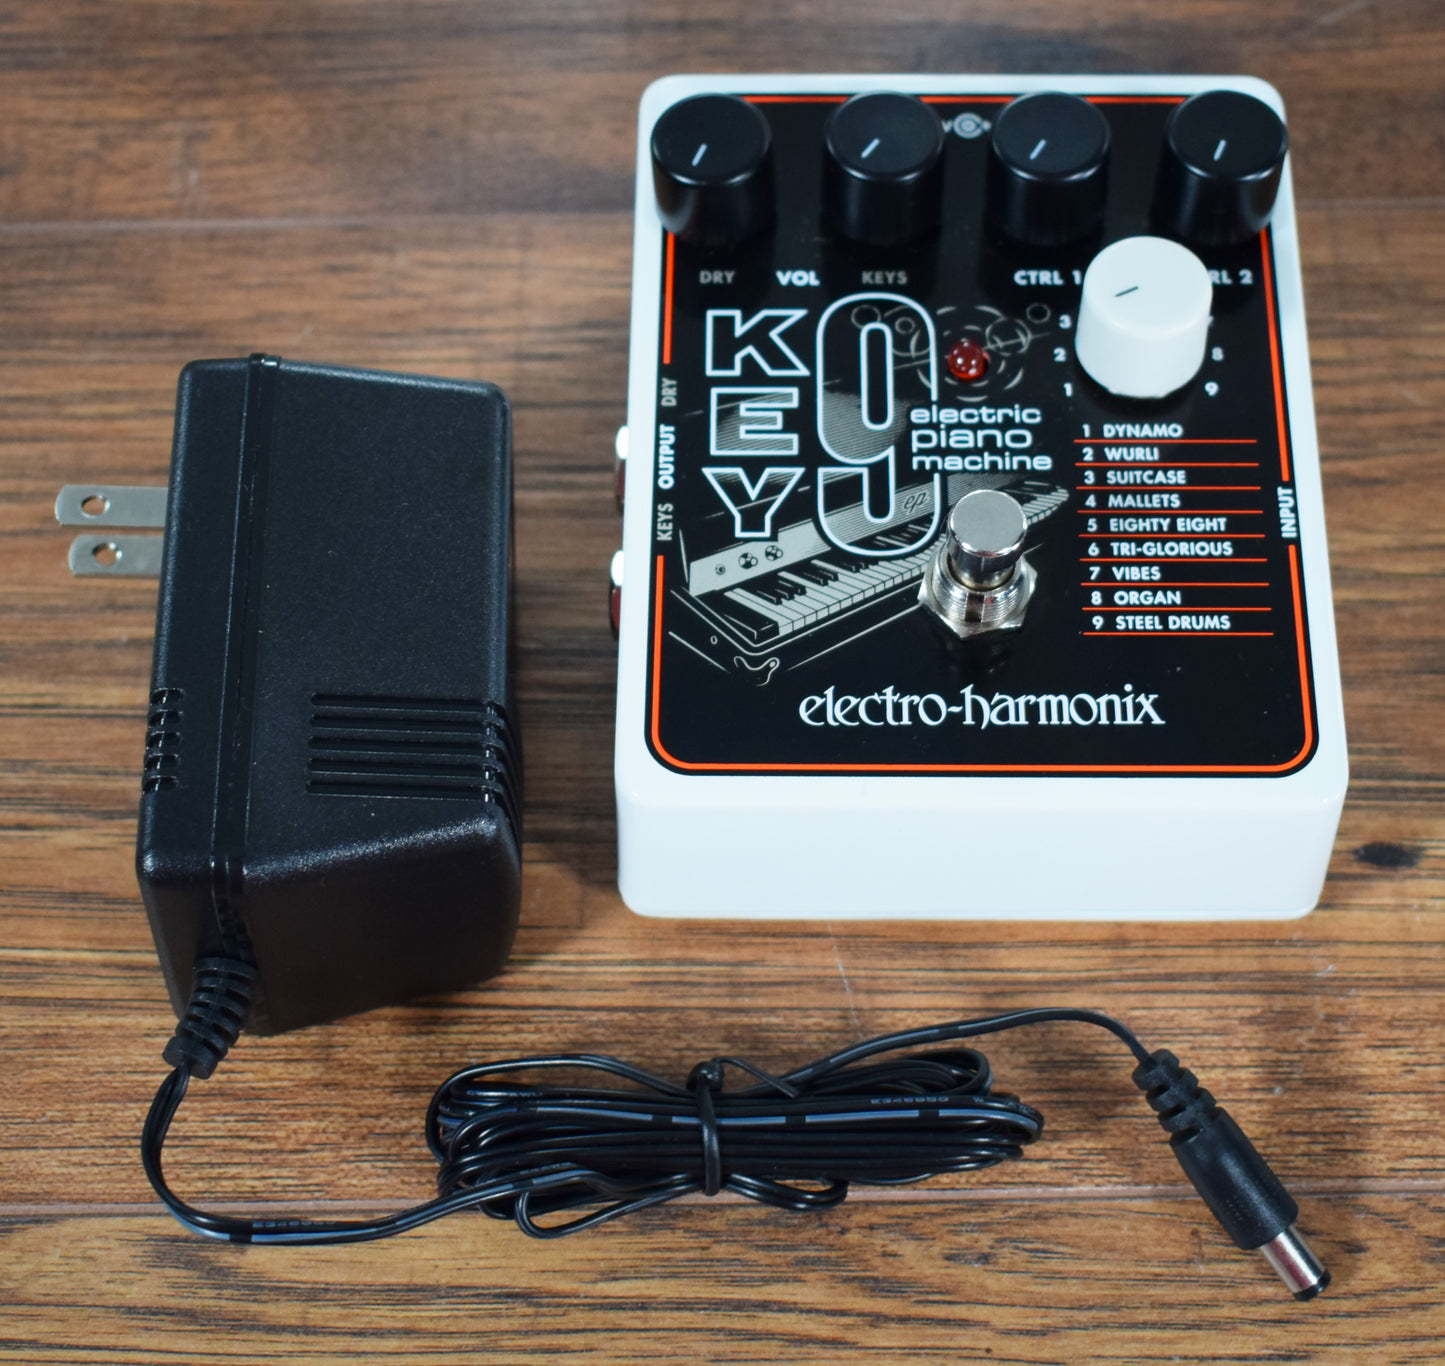 Electro-Harmonix EHX Key9 Electric Piano Machine Guitar Synth Effect Pedal Demo